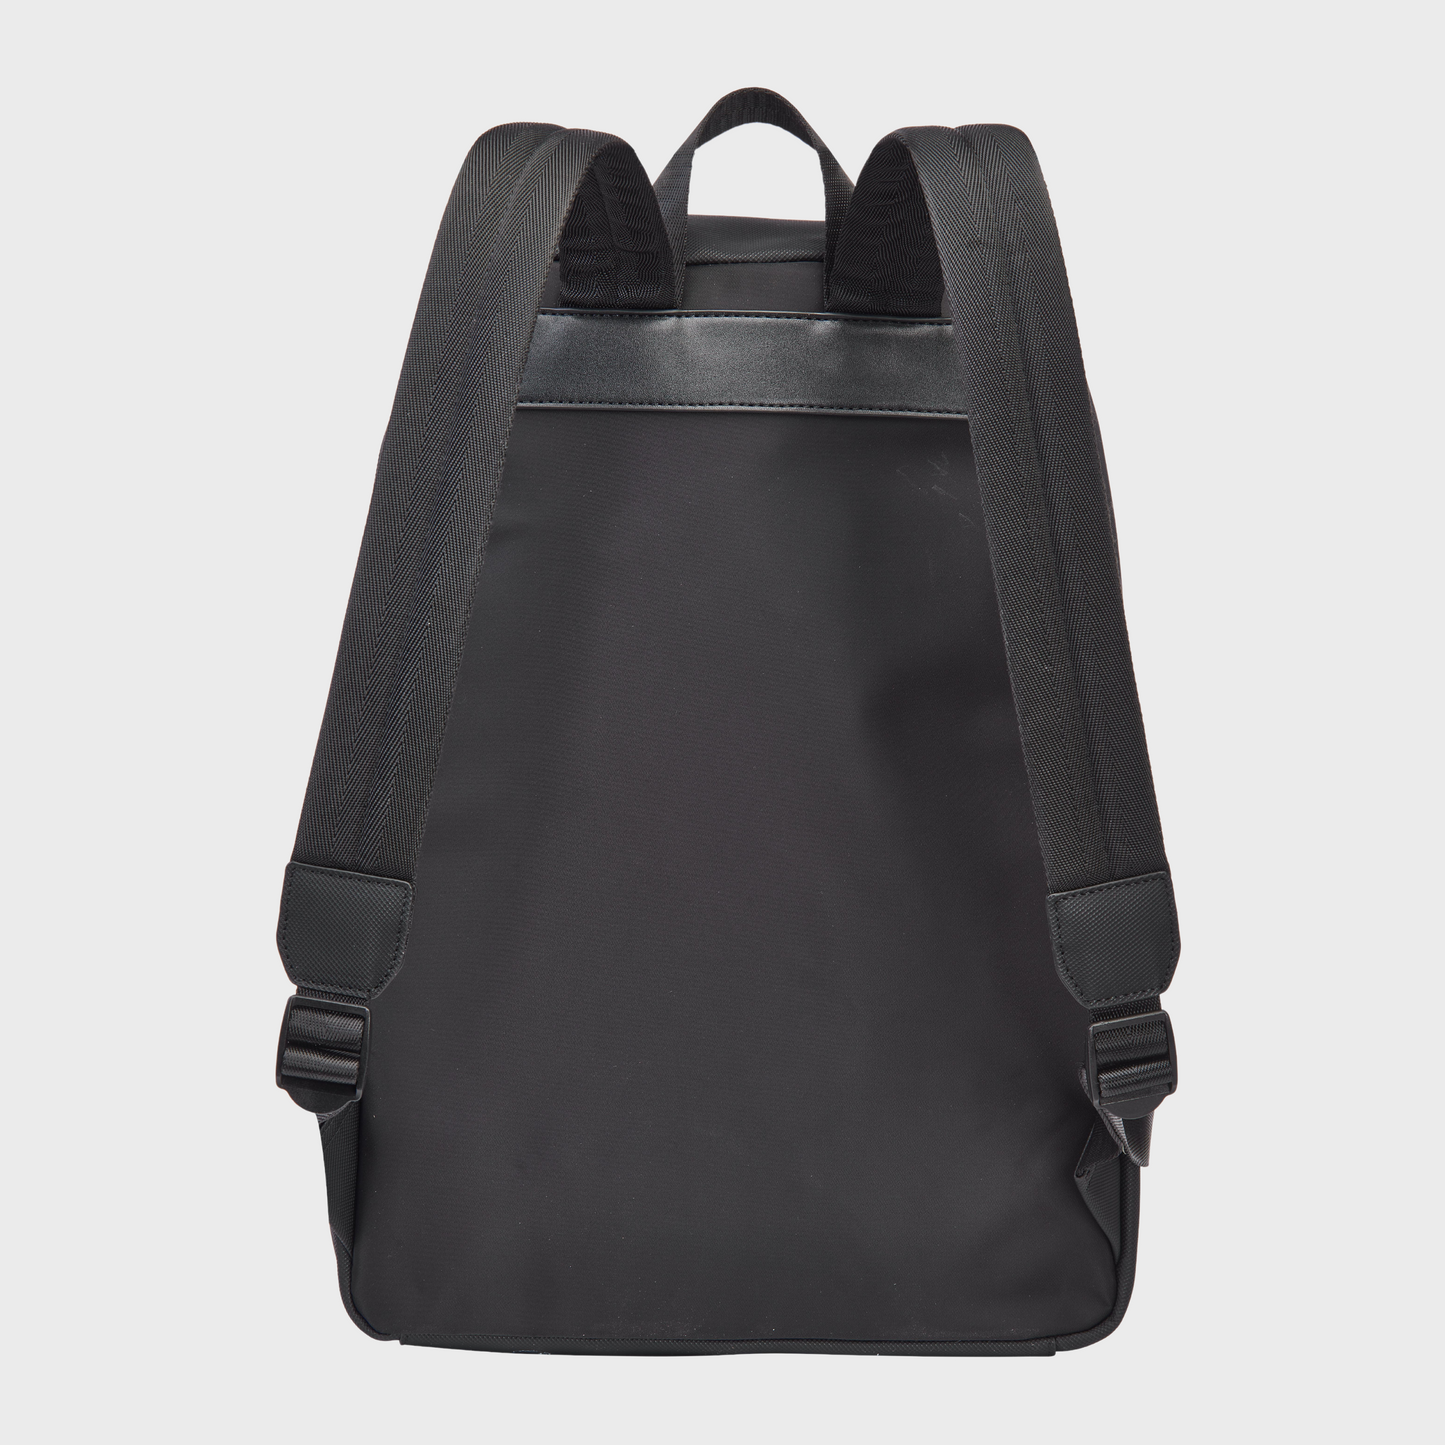 Leather Backpack Black - Boulière